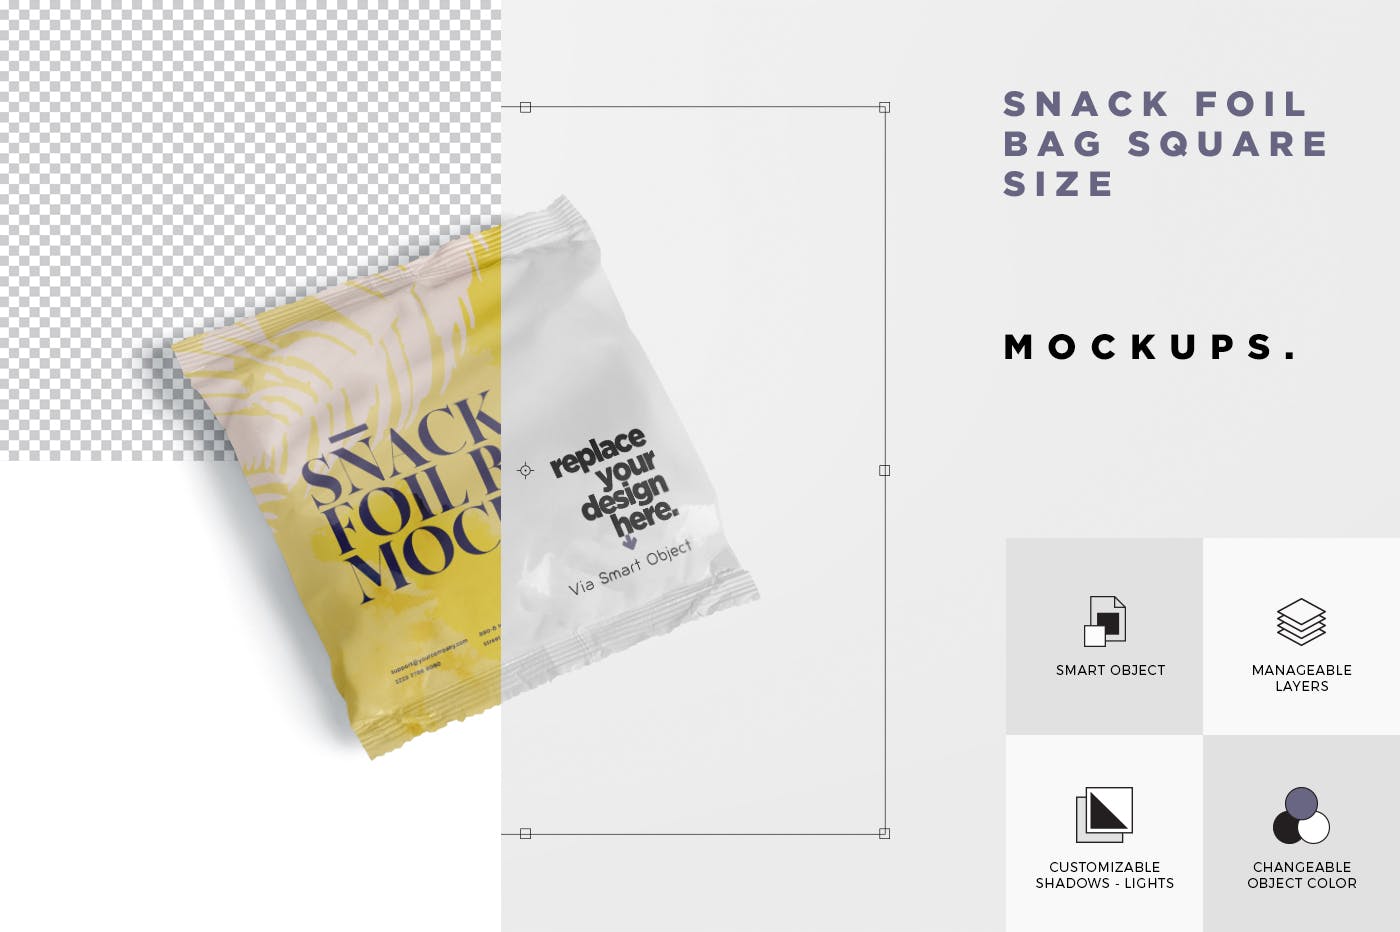 小吃零食铝箔包装袋设计图蚂蚁素材精选 Snack Foil Bag Mockup – Square Size – Small插图(6)